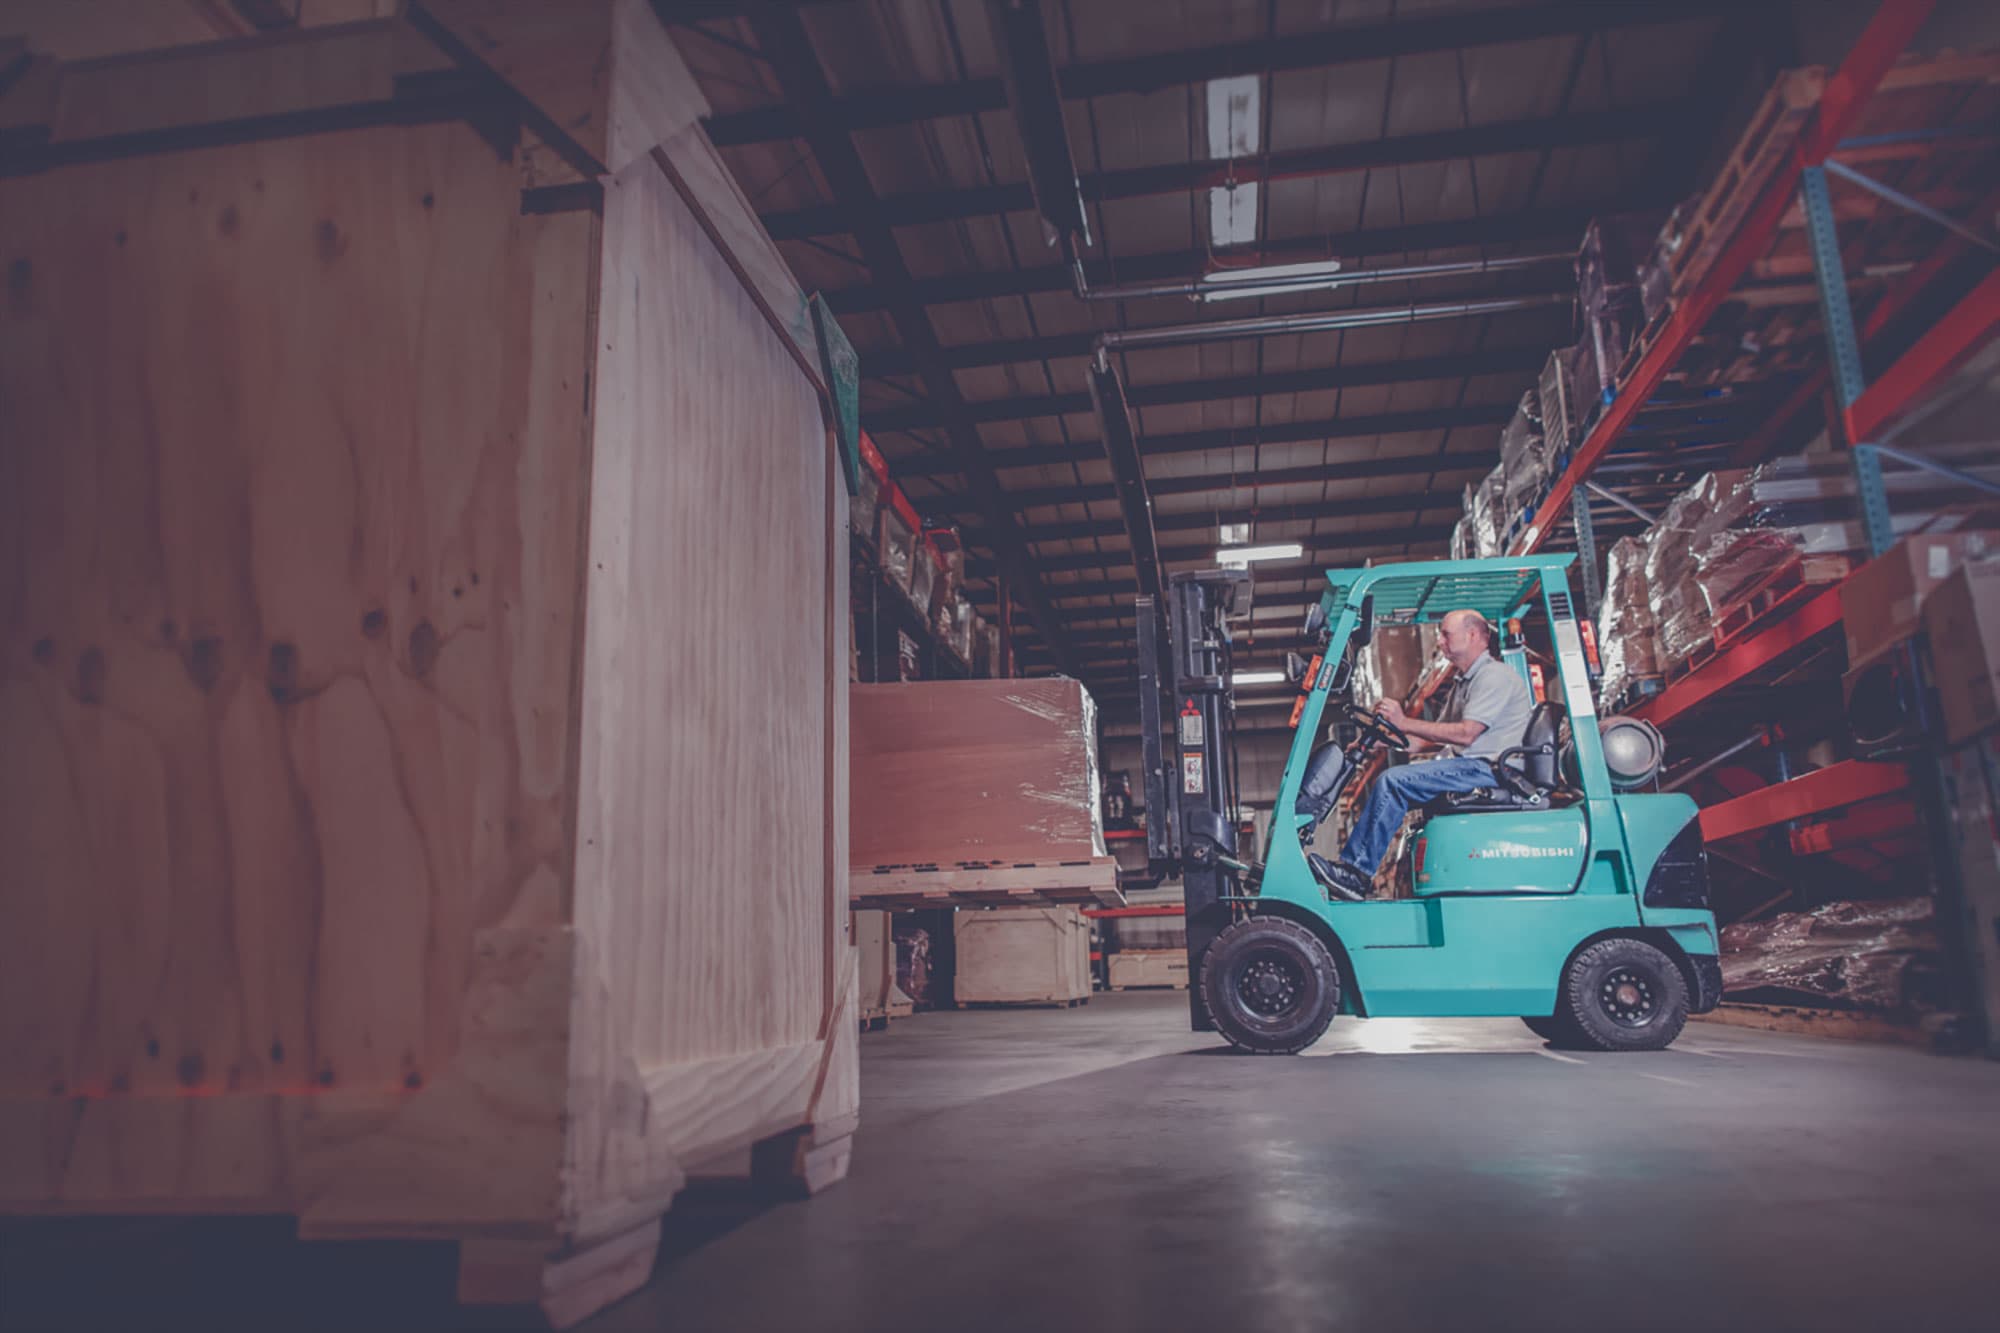 Propane-powered Forklift moving a skid onto a warehouse shelf.